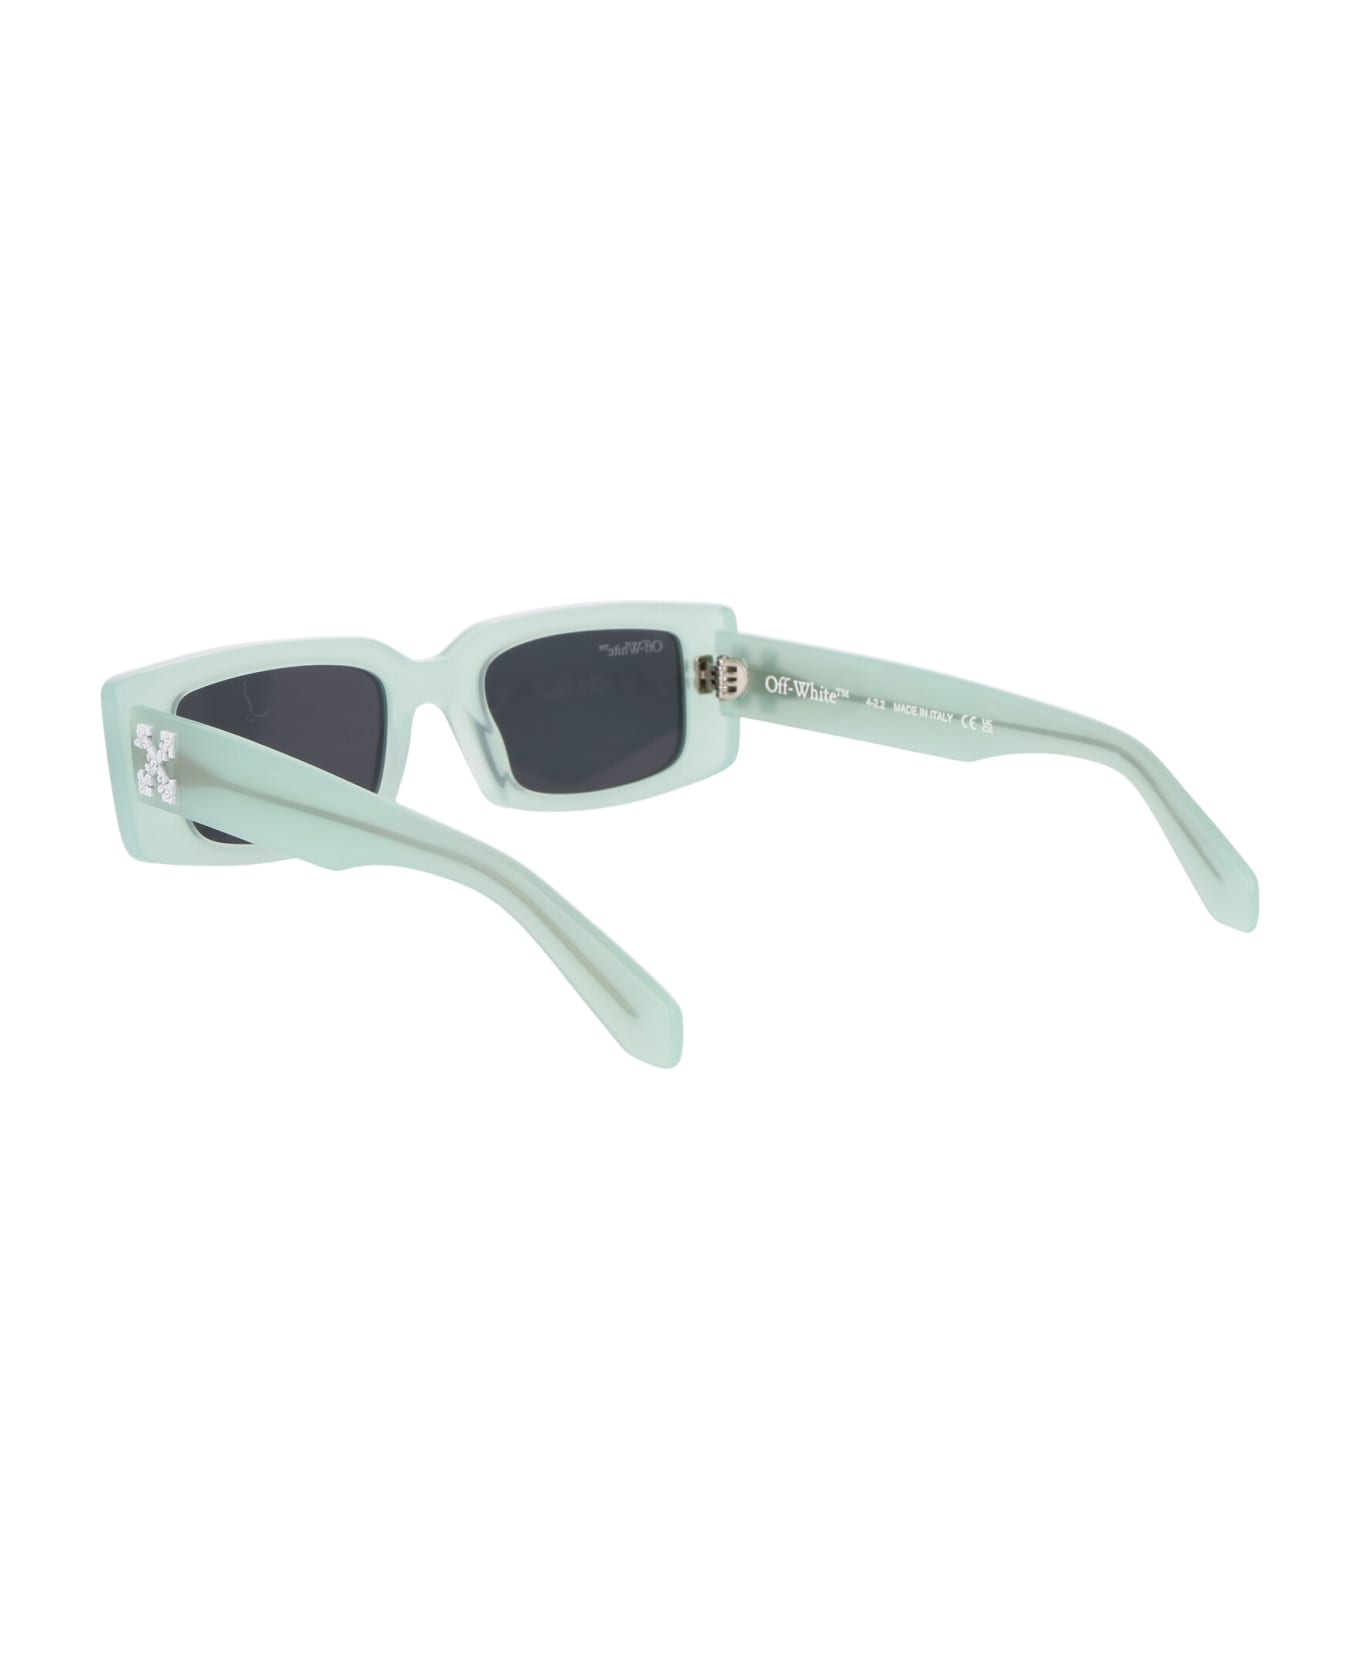 Off-White Arthur Sunglasses - 5907 TEAL DARK GREY サングラス